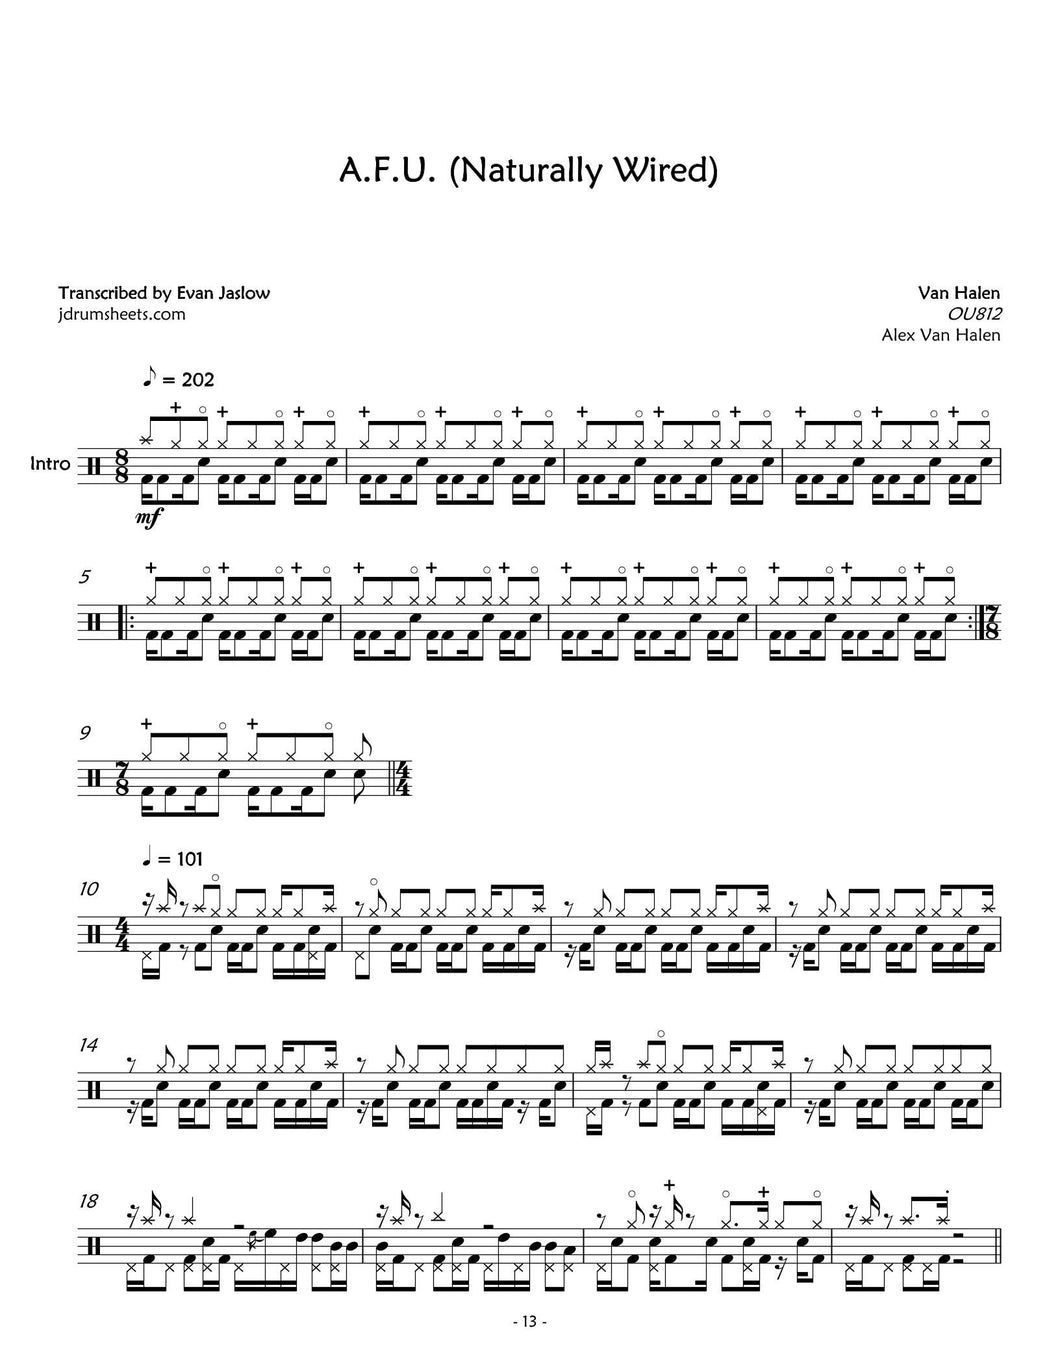 A.F.U. (Naturally Wired) - Van Halen - Full Drum Transcription / Drum Sheet Music - Jaslow Drum Sheets